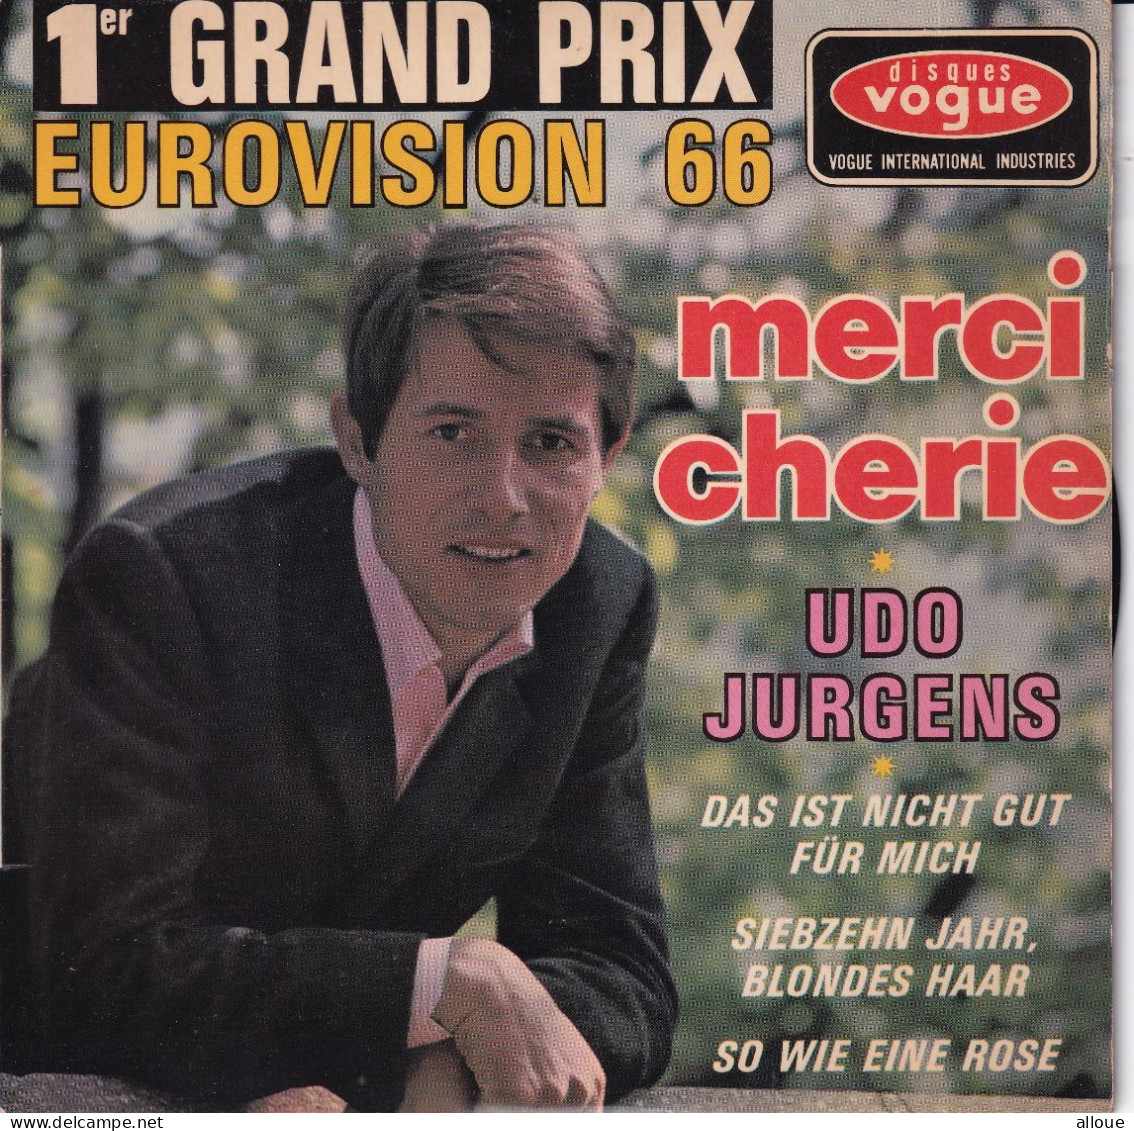 UDO JURGENS - FR EP EUROVISION 1966  - MERCI CHERIE + 3 - Other - German Music